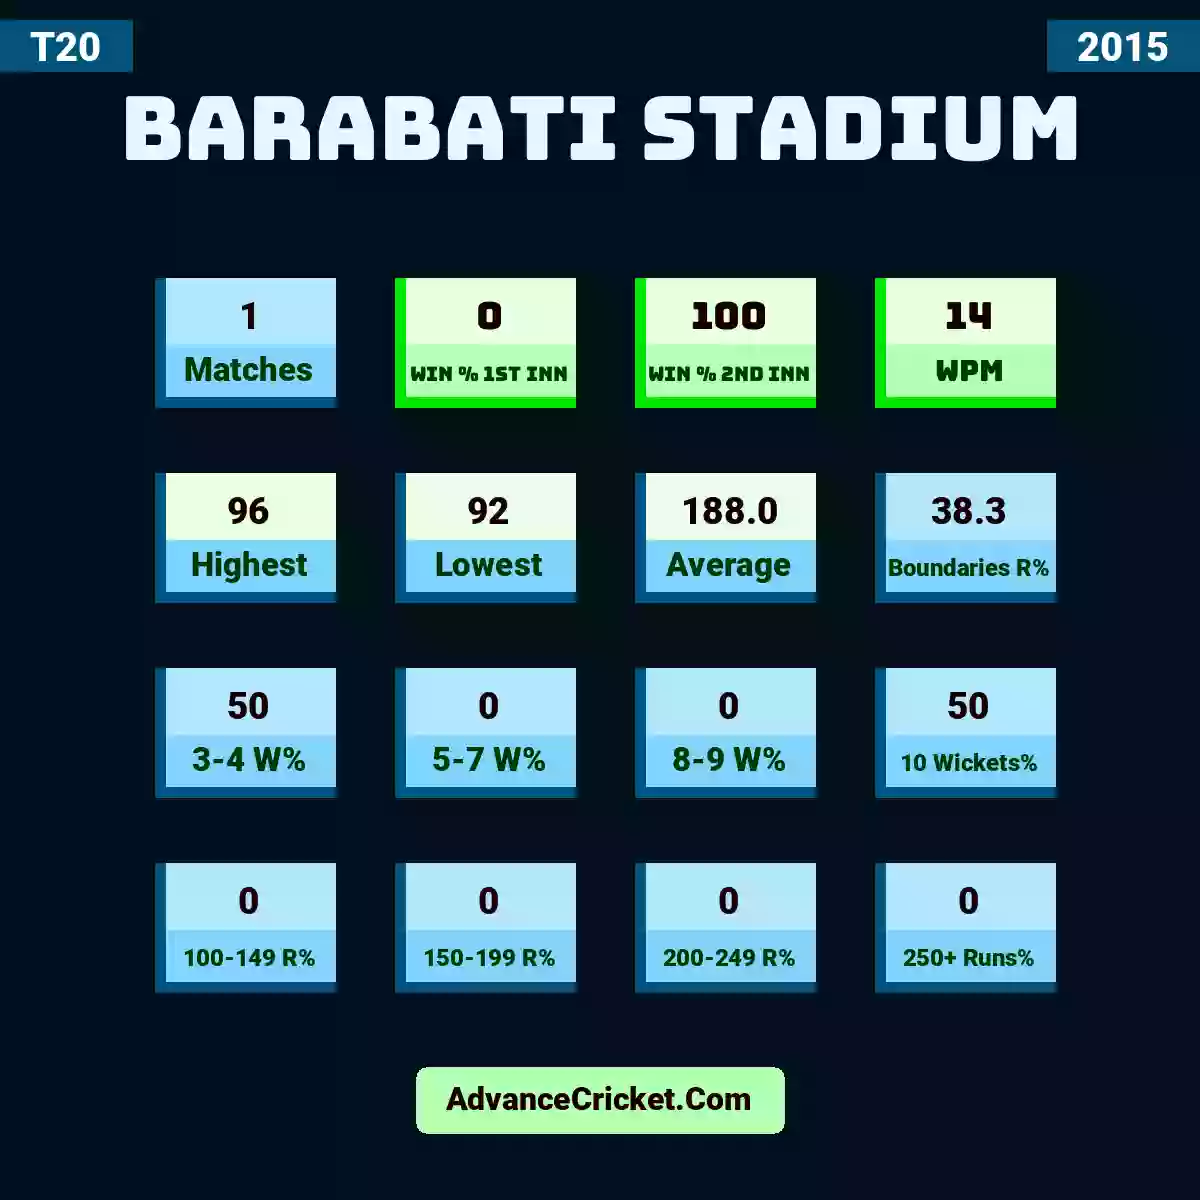 Image showing Barabati Stadium with Matches: 1, Win % 1st Inn: 0, Win % 2nd Inn: 100, WPM: 14, Highest: 96, Lowest: 92, Average: 188.0, Boundaries R%: 38.3, 3-4 W%: 50, 5-7 W%: 0, 8-9 W%: 0, 10 Wickets%: 50, 100-149 R%: 0, 150-199 R%: 0, 200-249 R%: 0, 250+ Runs%: 0.